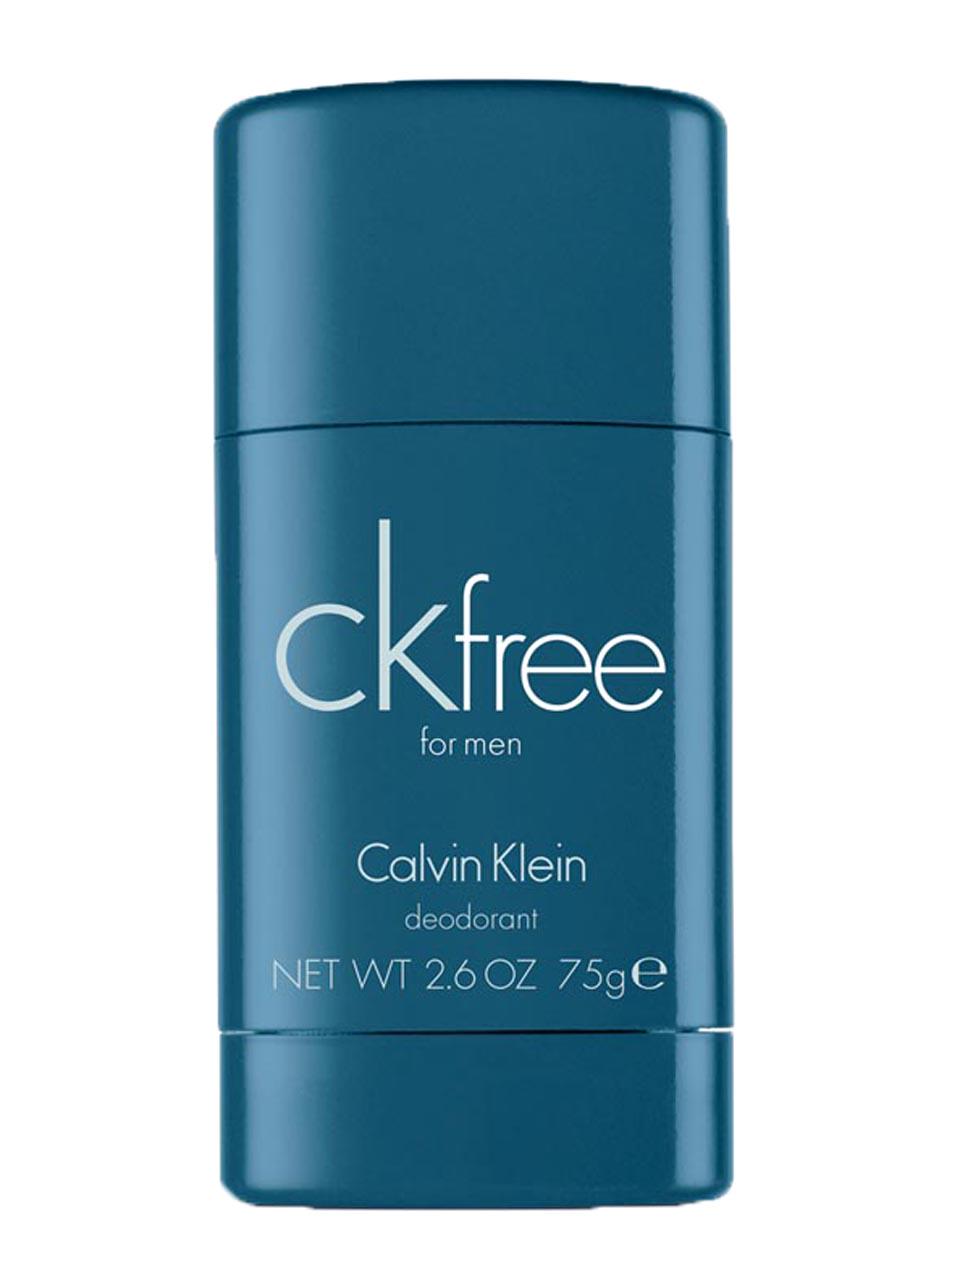 Calvin Klein | Stick Airport 75 Shopping Online CK Free Frankfurt ml Deodorant